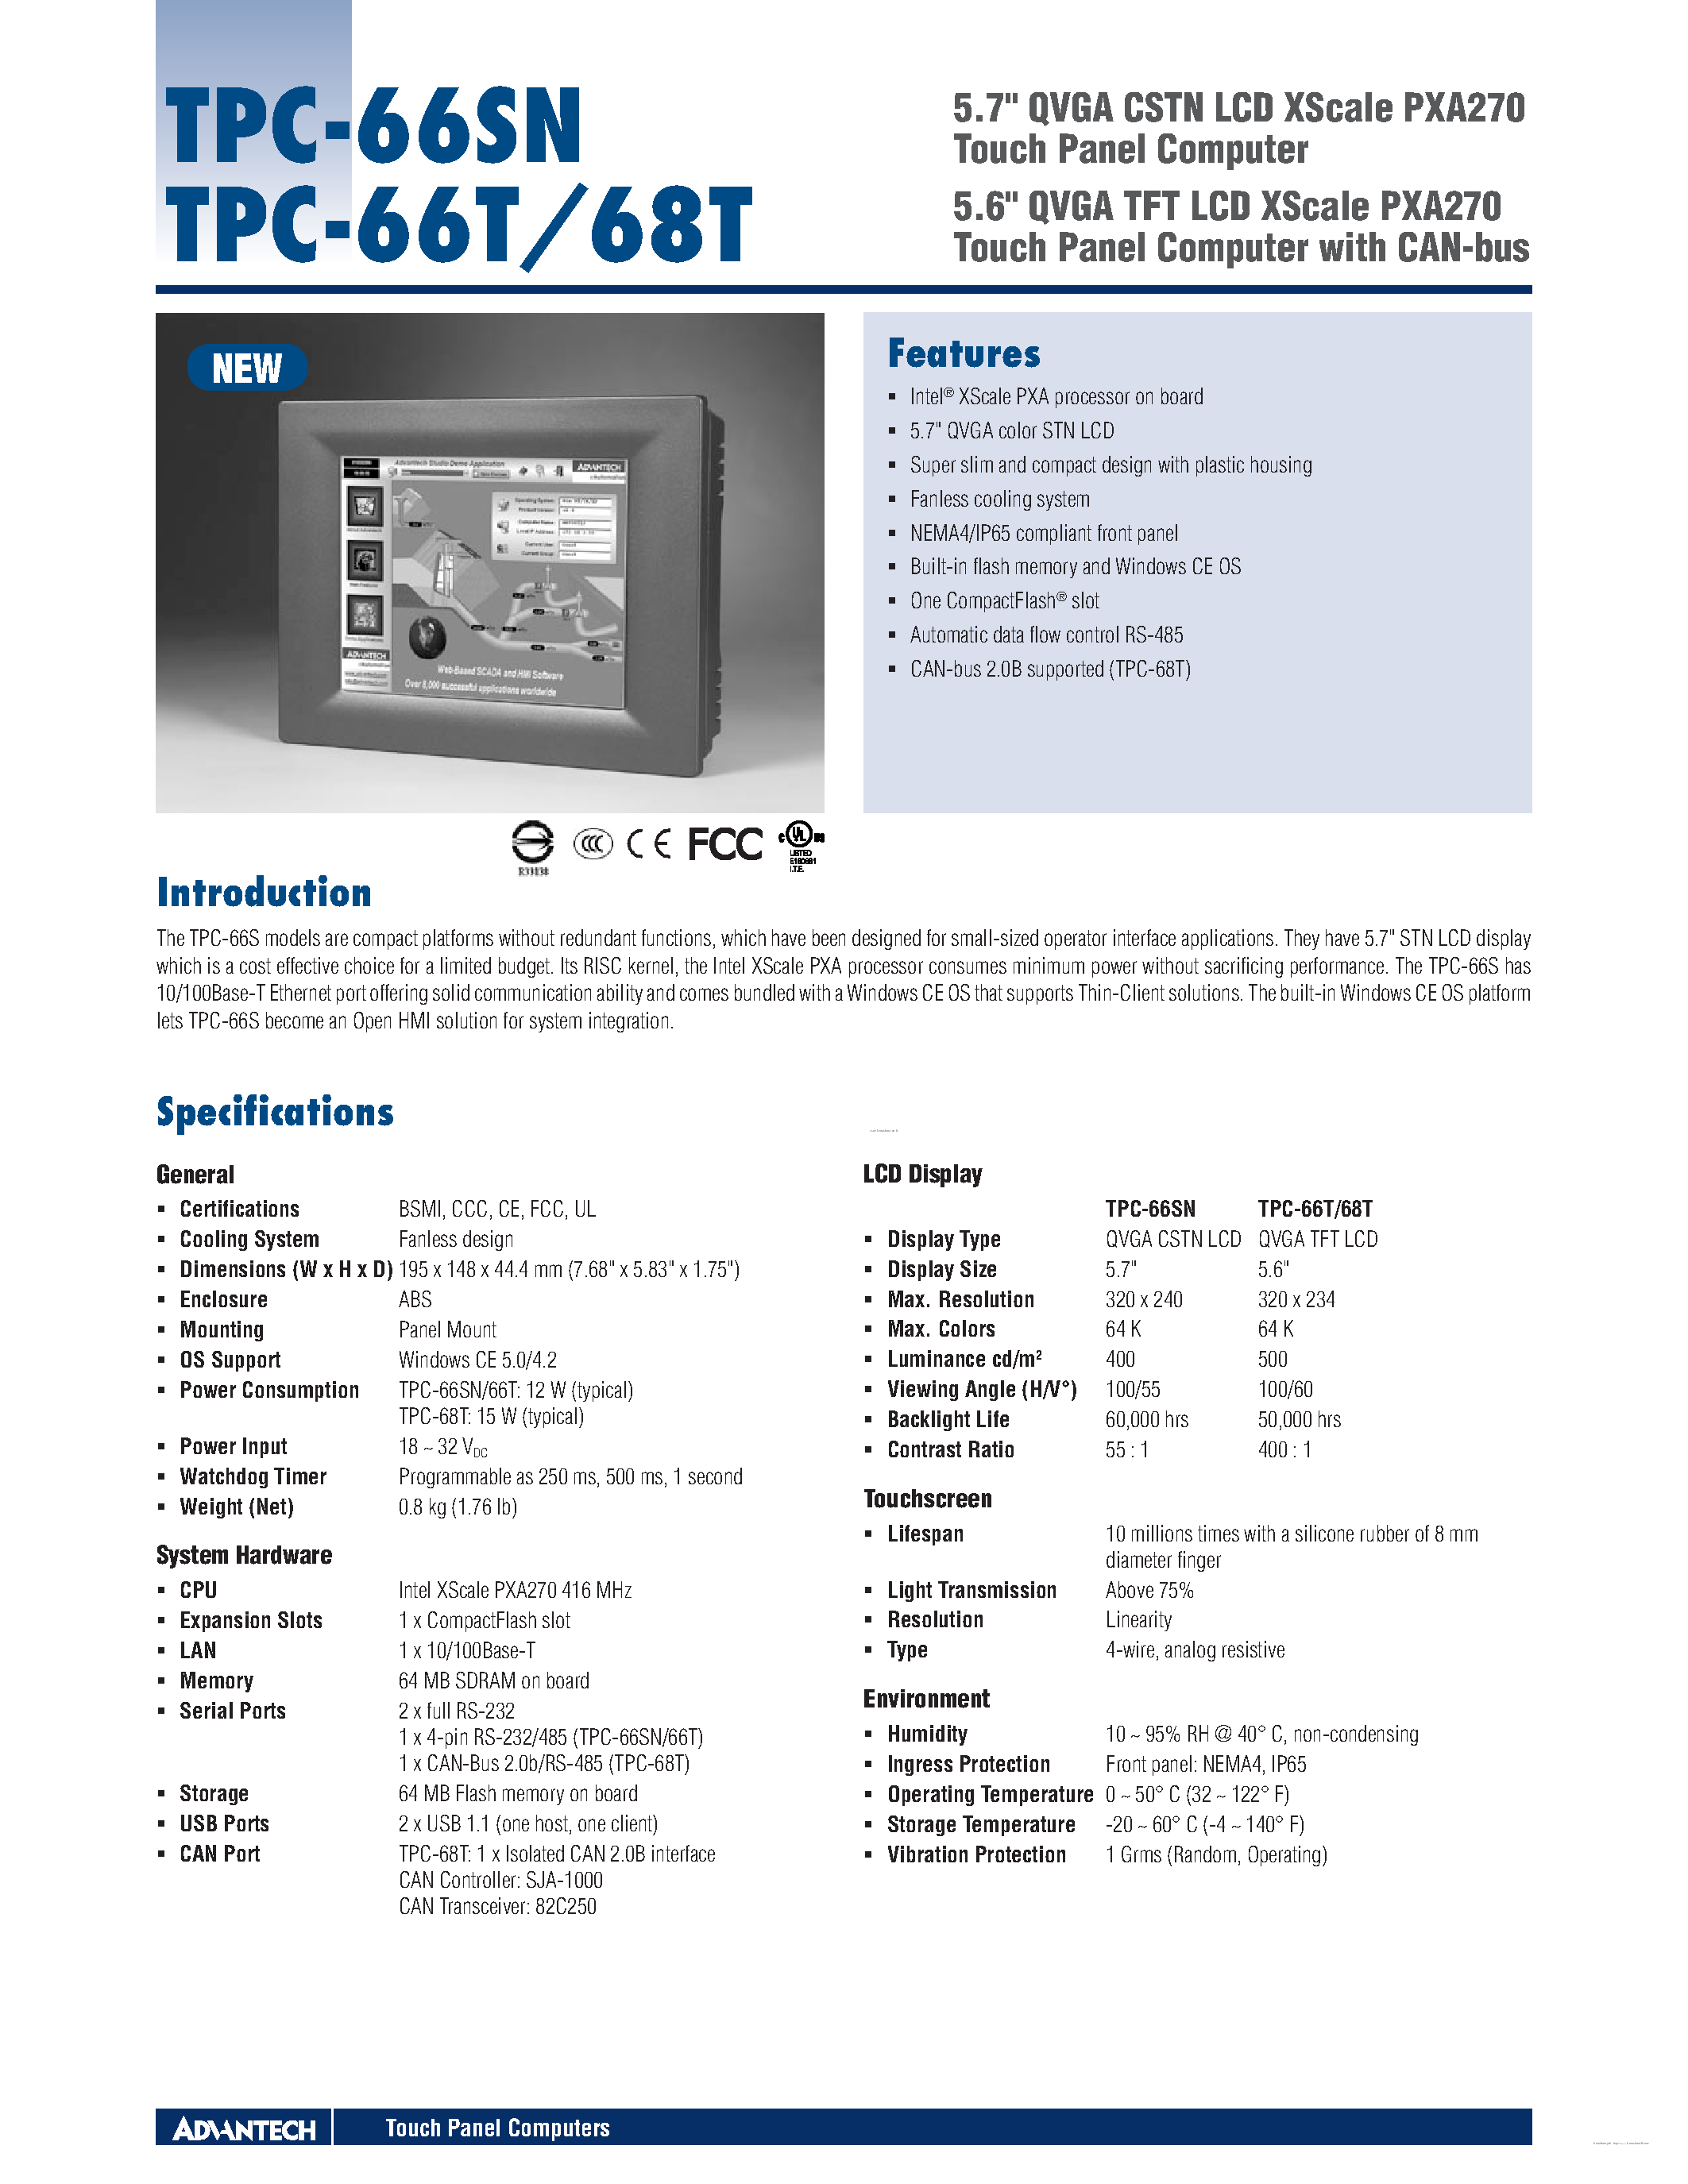 Datasheet TPC-68T - 5.7 QVGA CSTN LCD XScale PXA270 Touch Panel Computer page 1